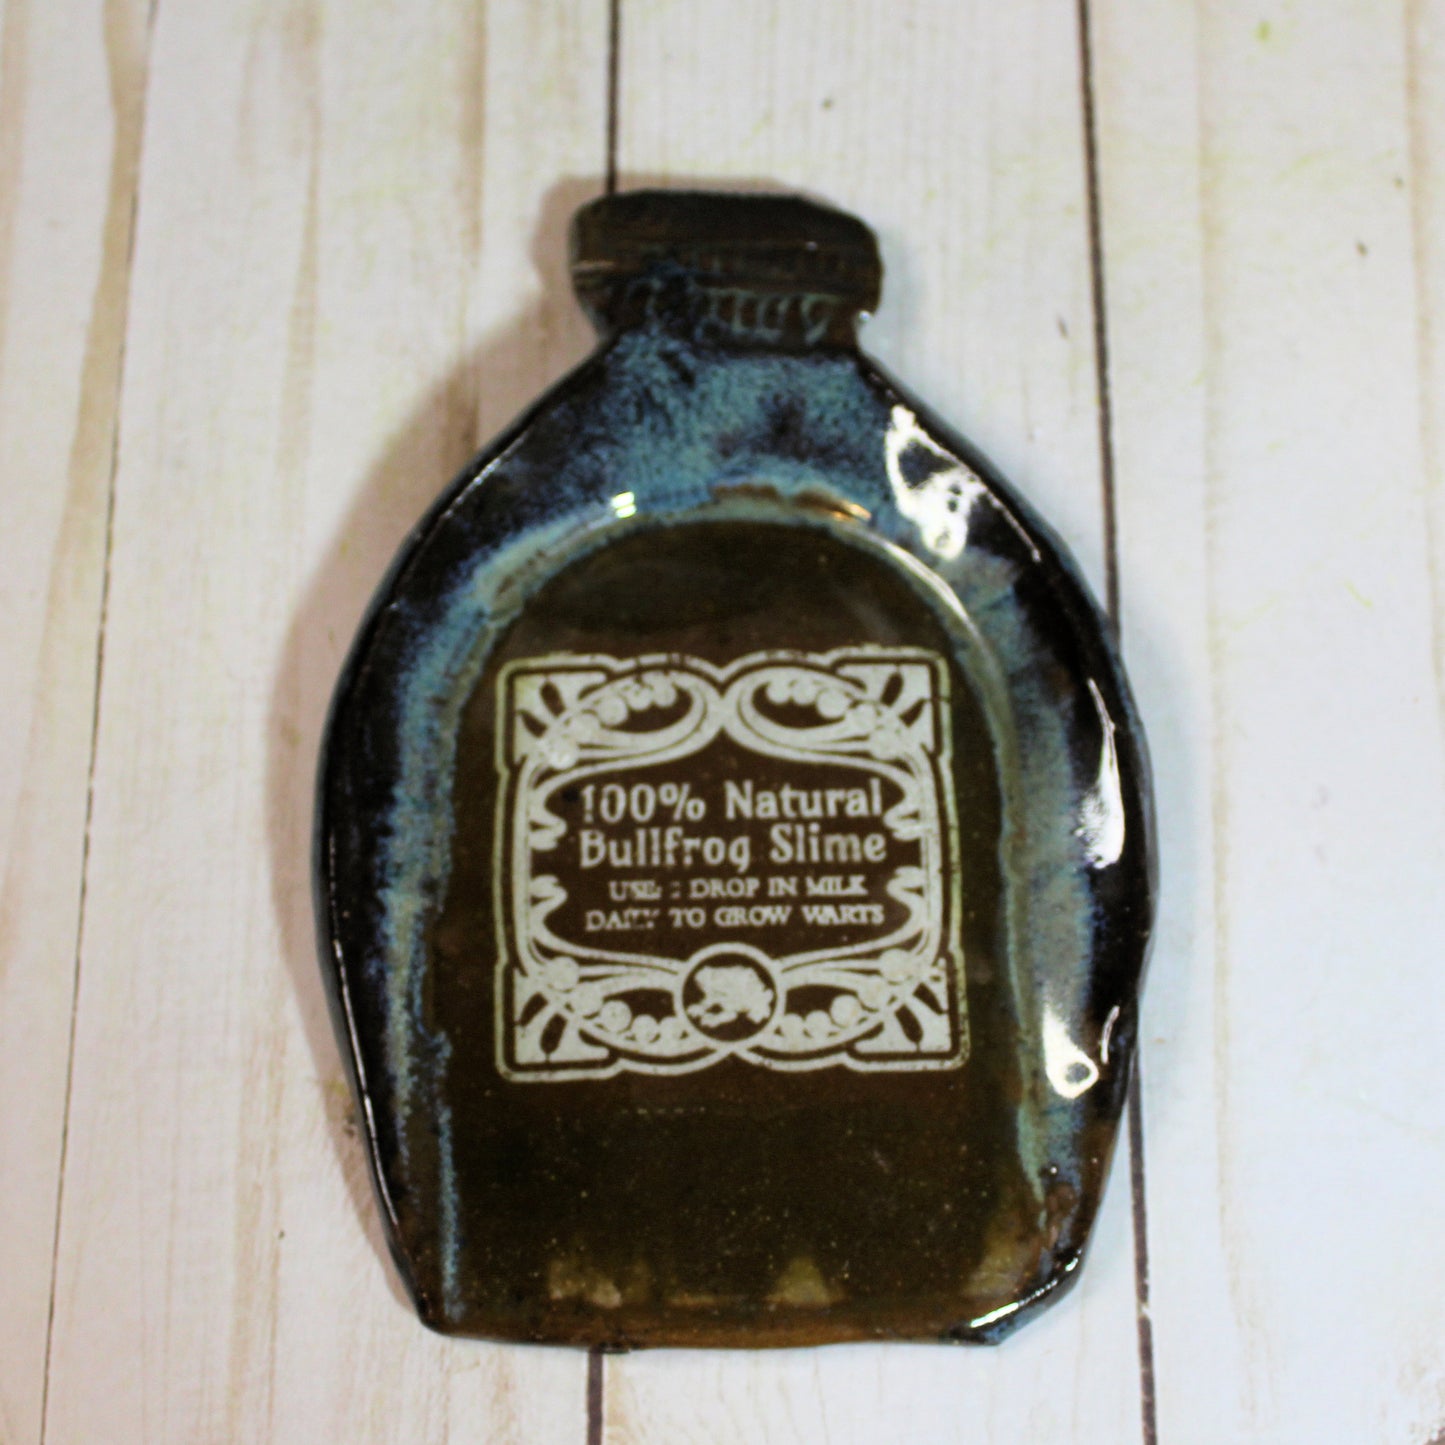 Apothecary Bottle Spoon Rest - Bullfrog Slime